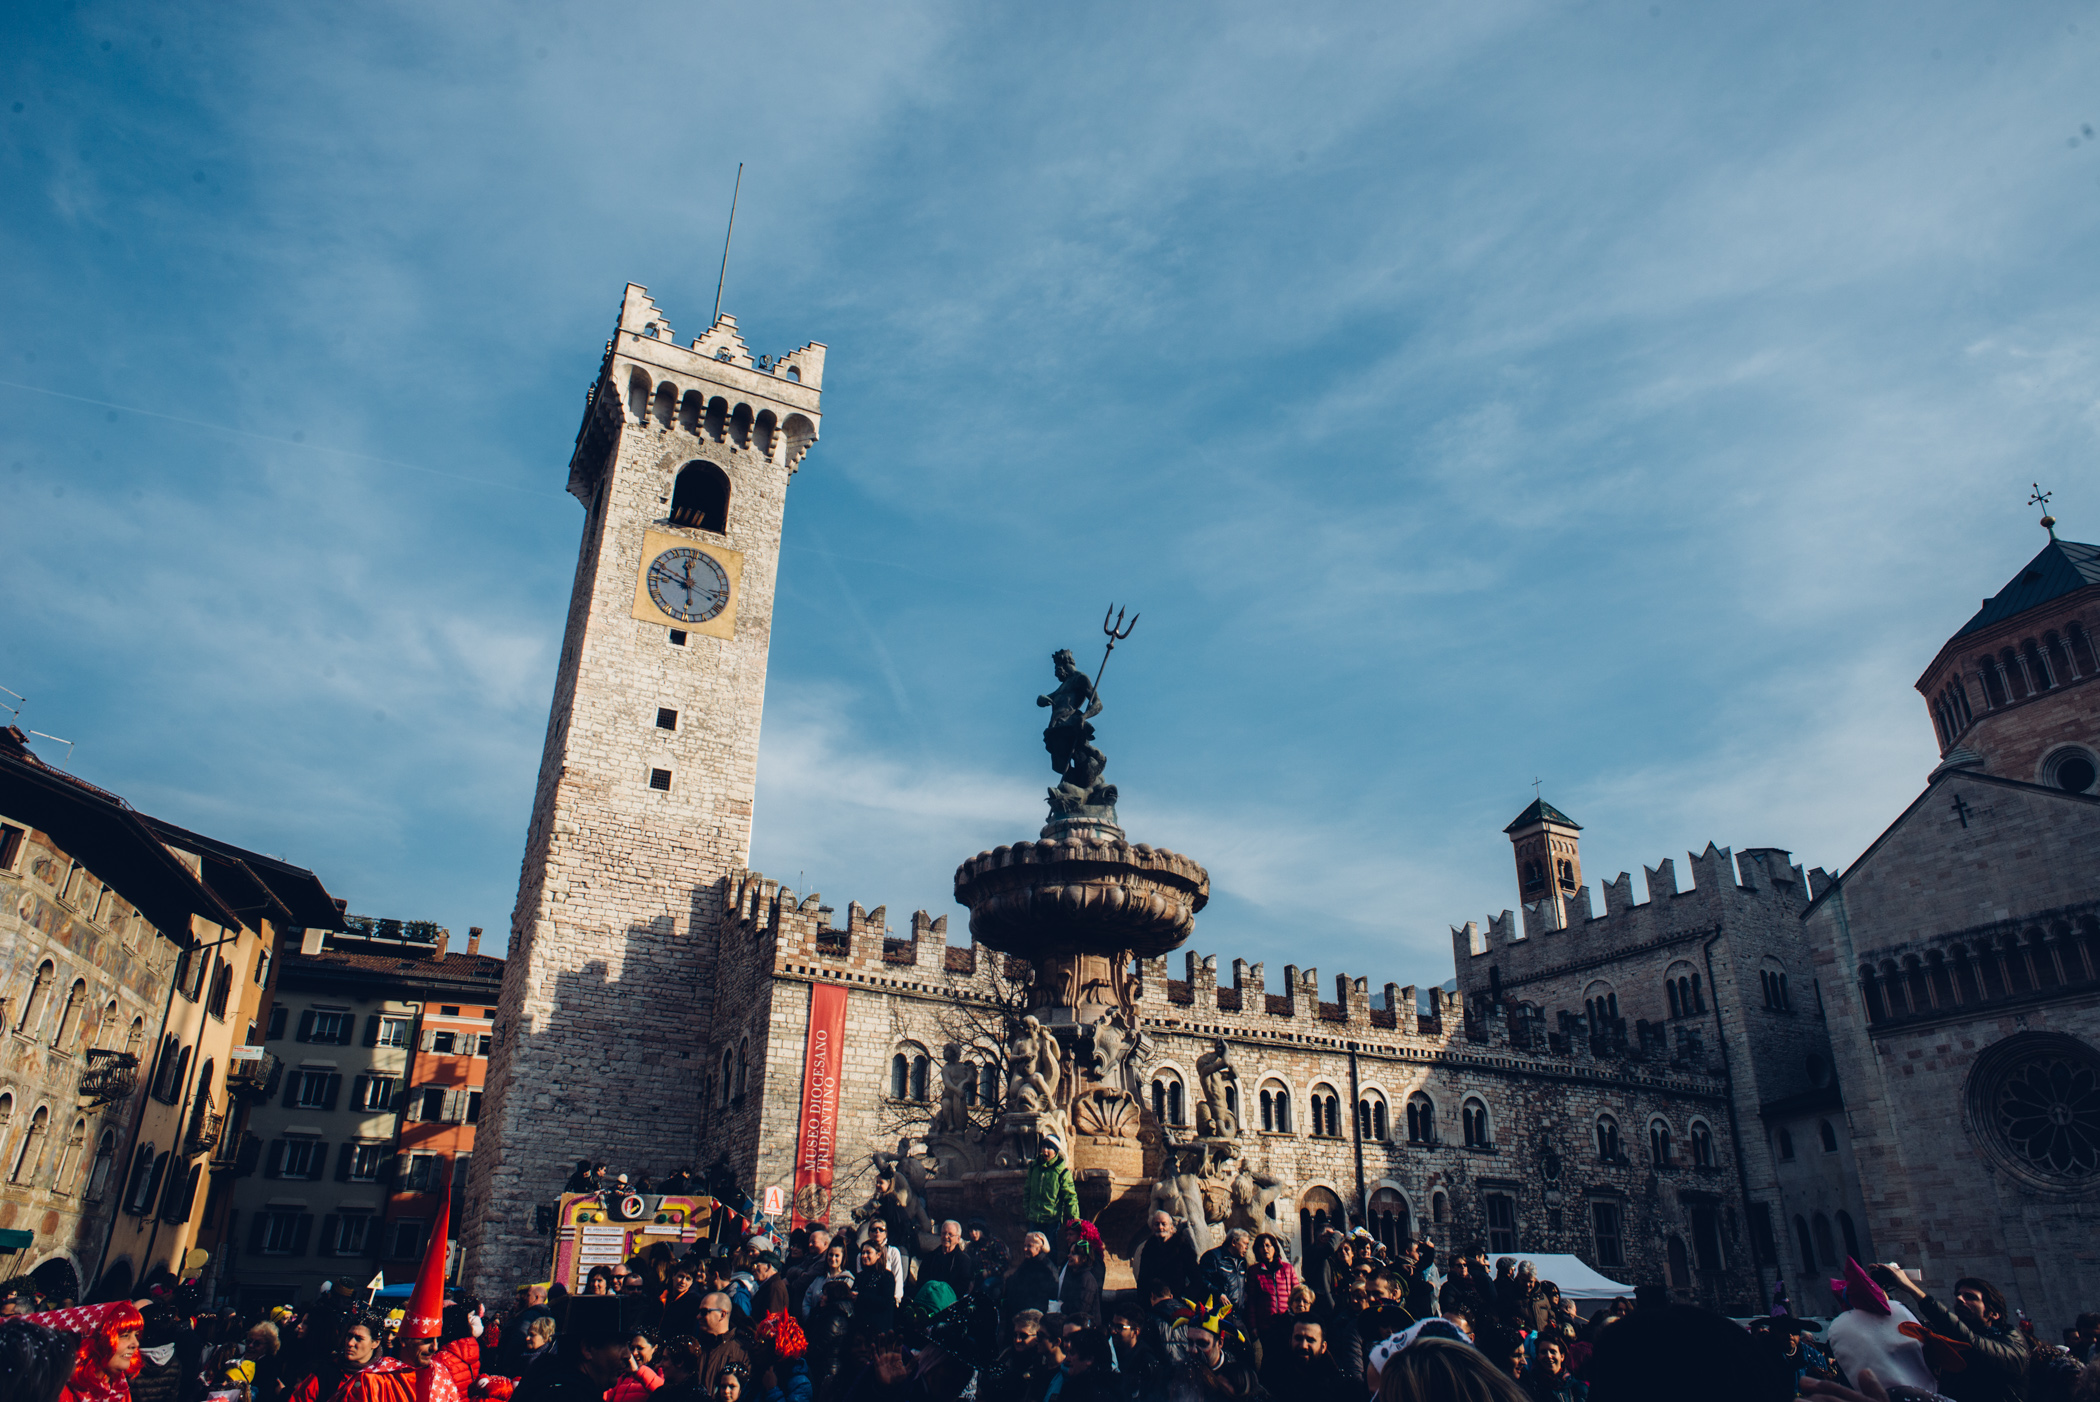 Piazza del Duomo in Trento, where we stumbled into a Carnevale parade.